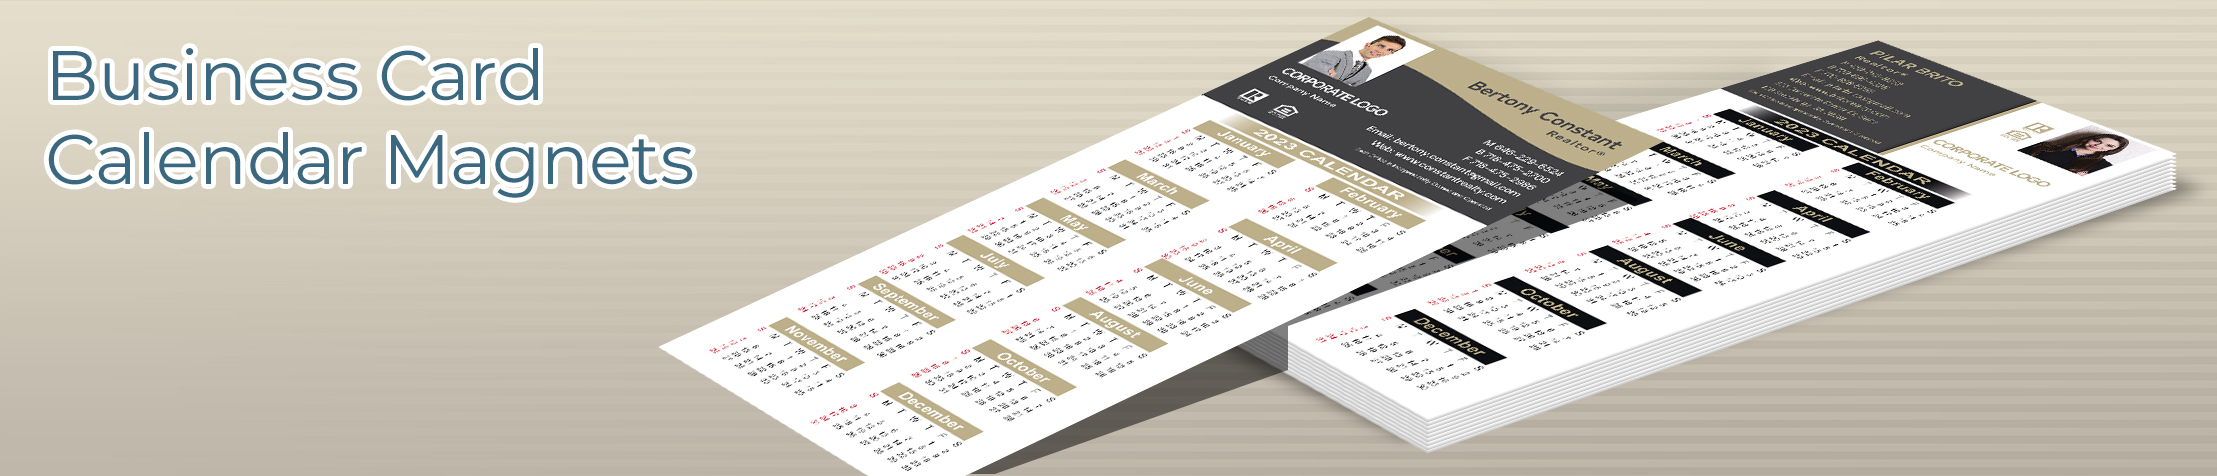 Century 21 Real Estate Business Card Calendar Magnets - Century 21  personalized marketing materials | BestPrintBuy.com